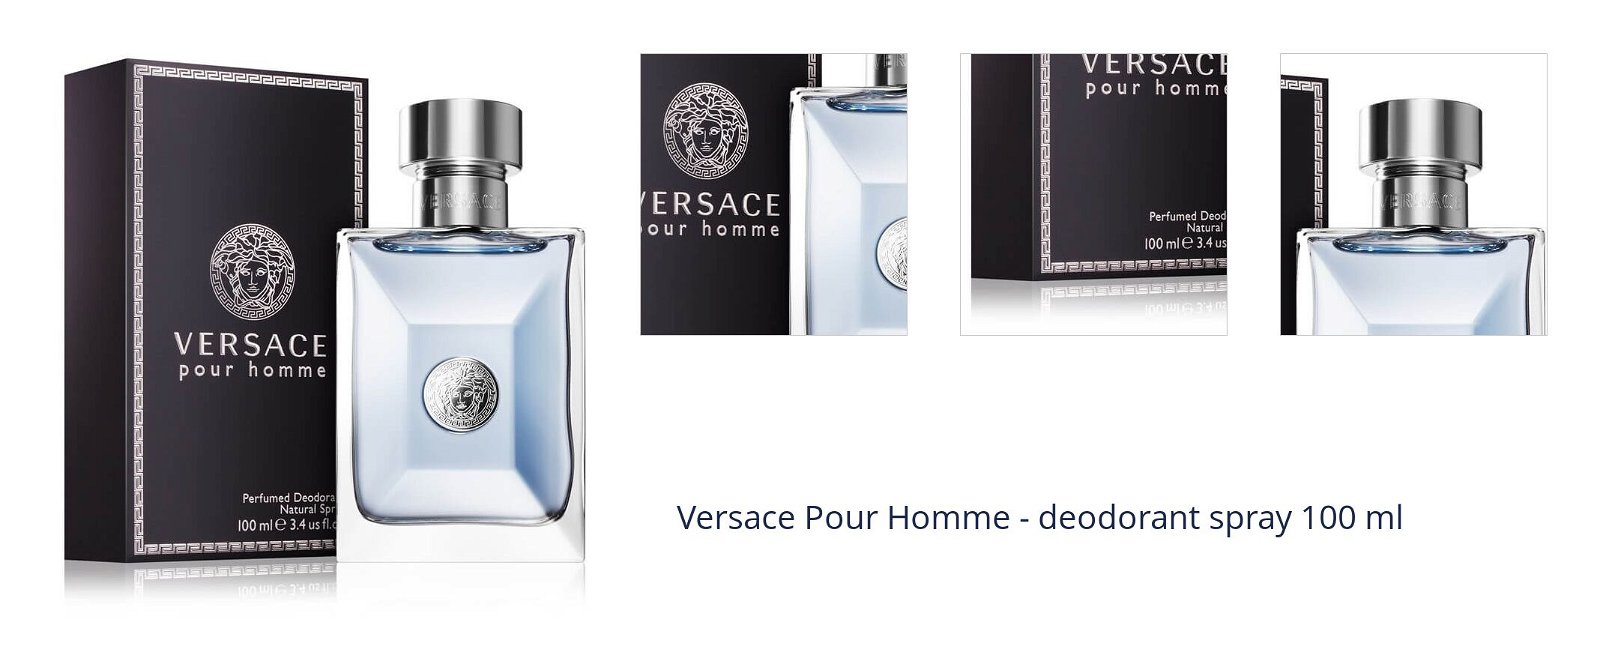 Versace Pour Homme - deodorant spray 100 ml 1